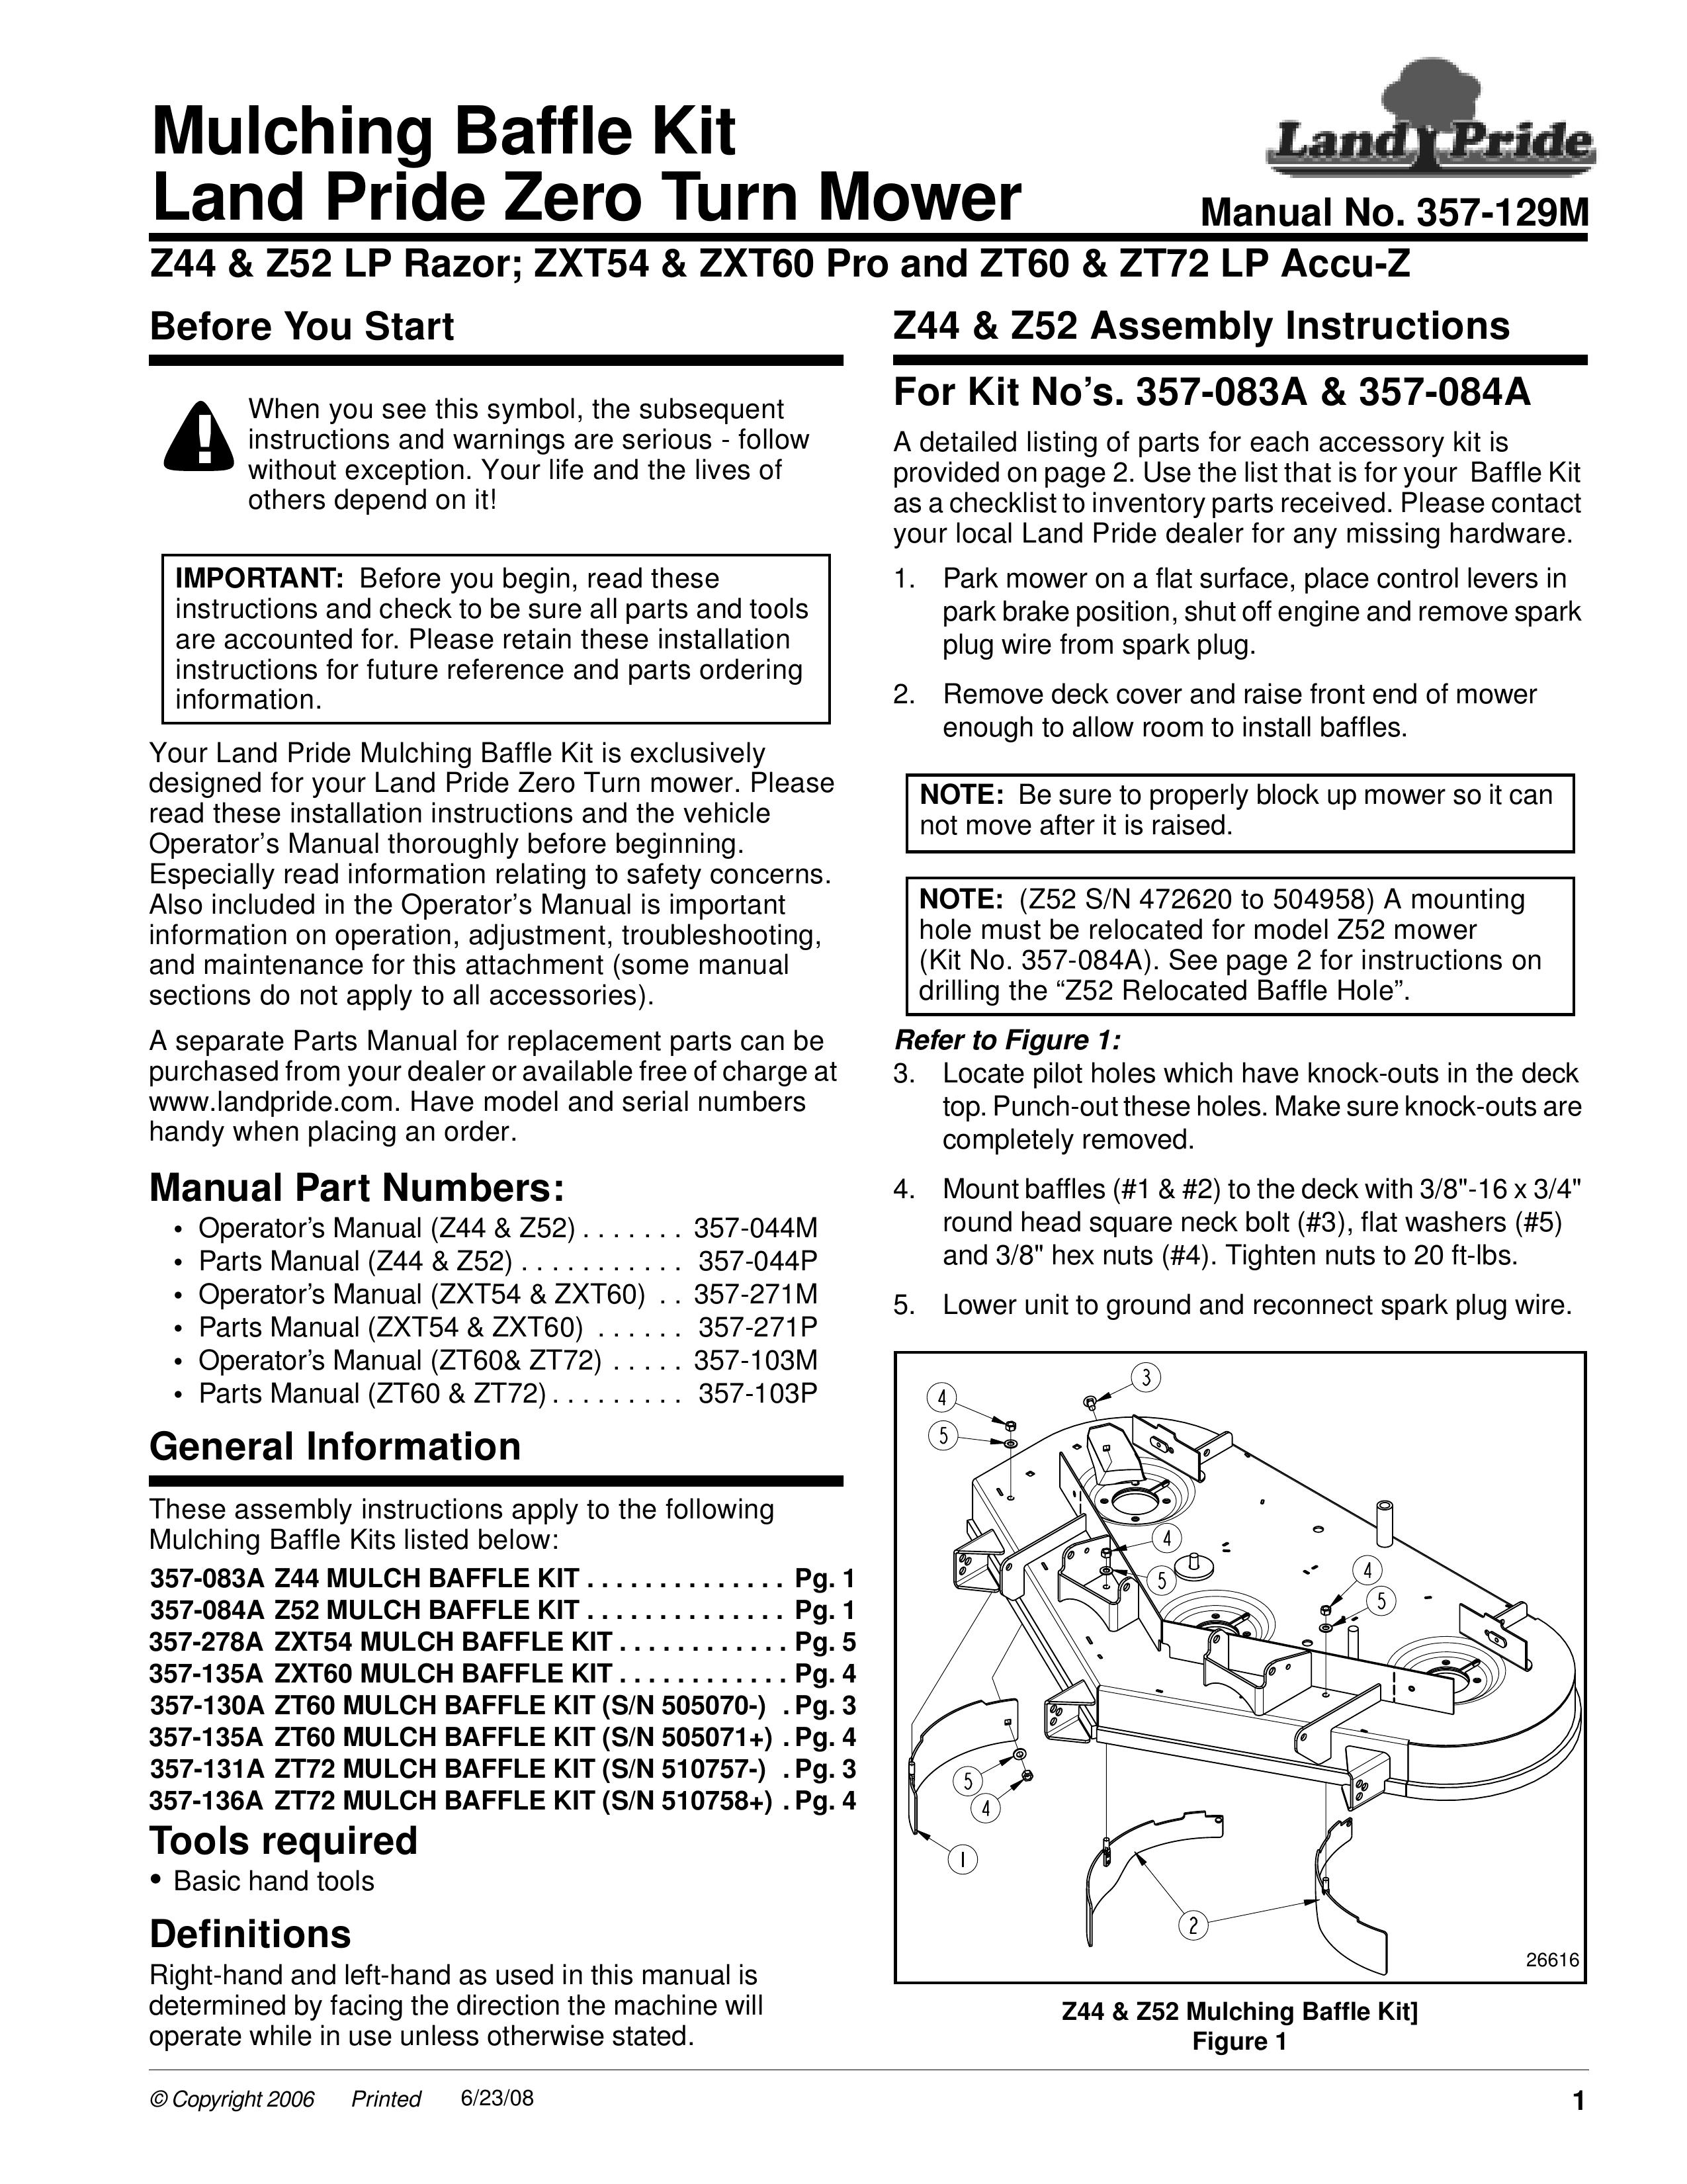 Land Pride 357-131A ZT72 Lawn Mower User Manual